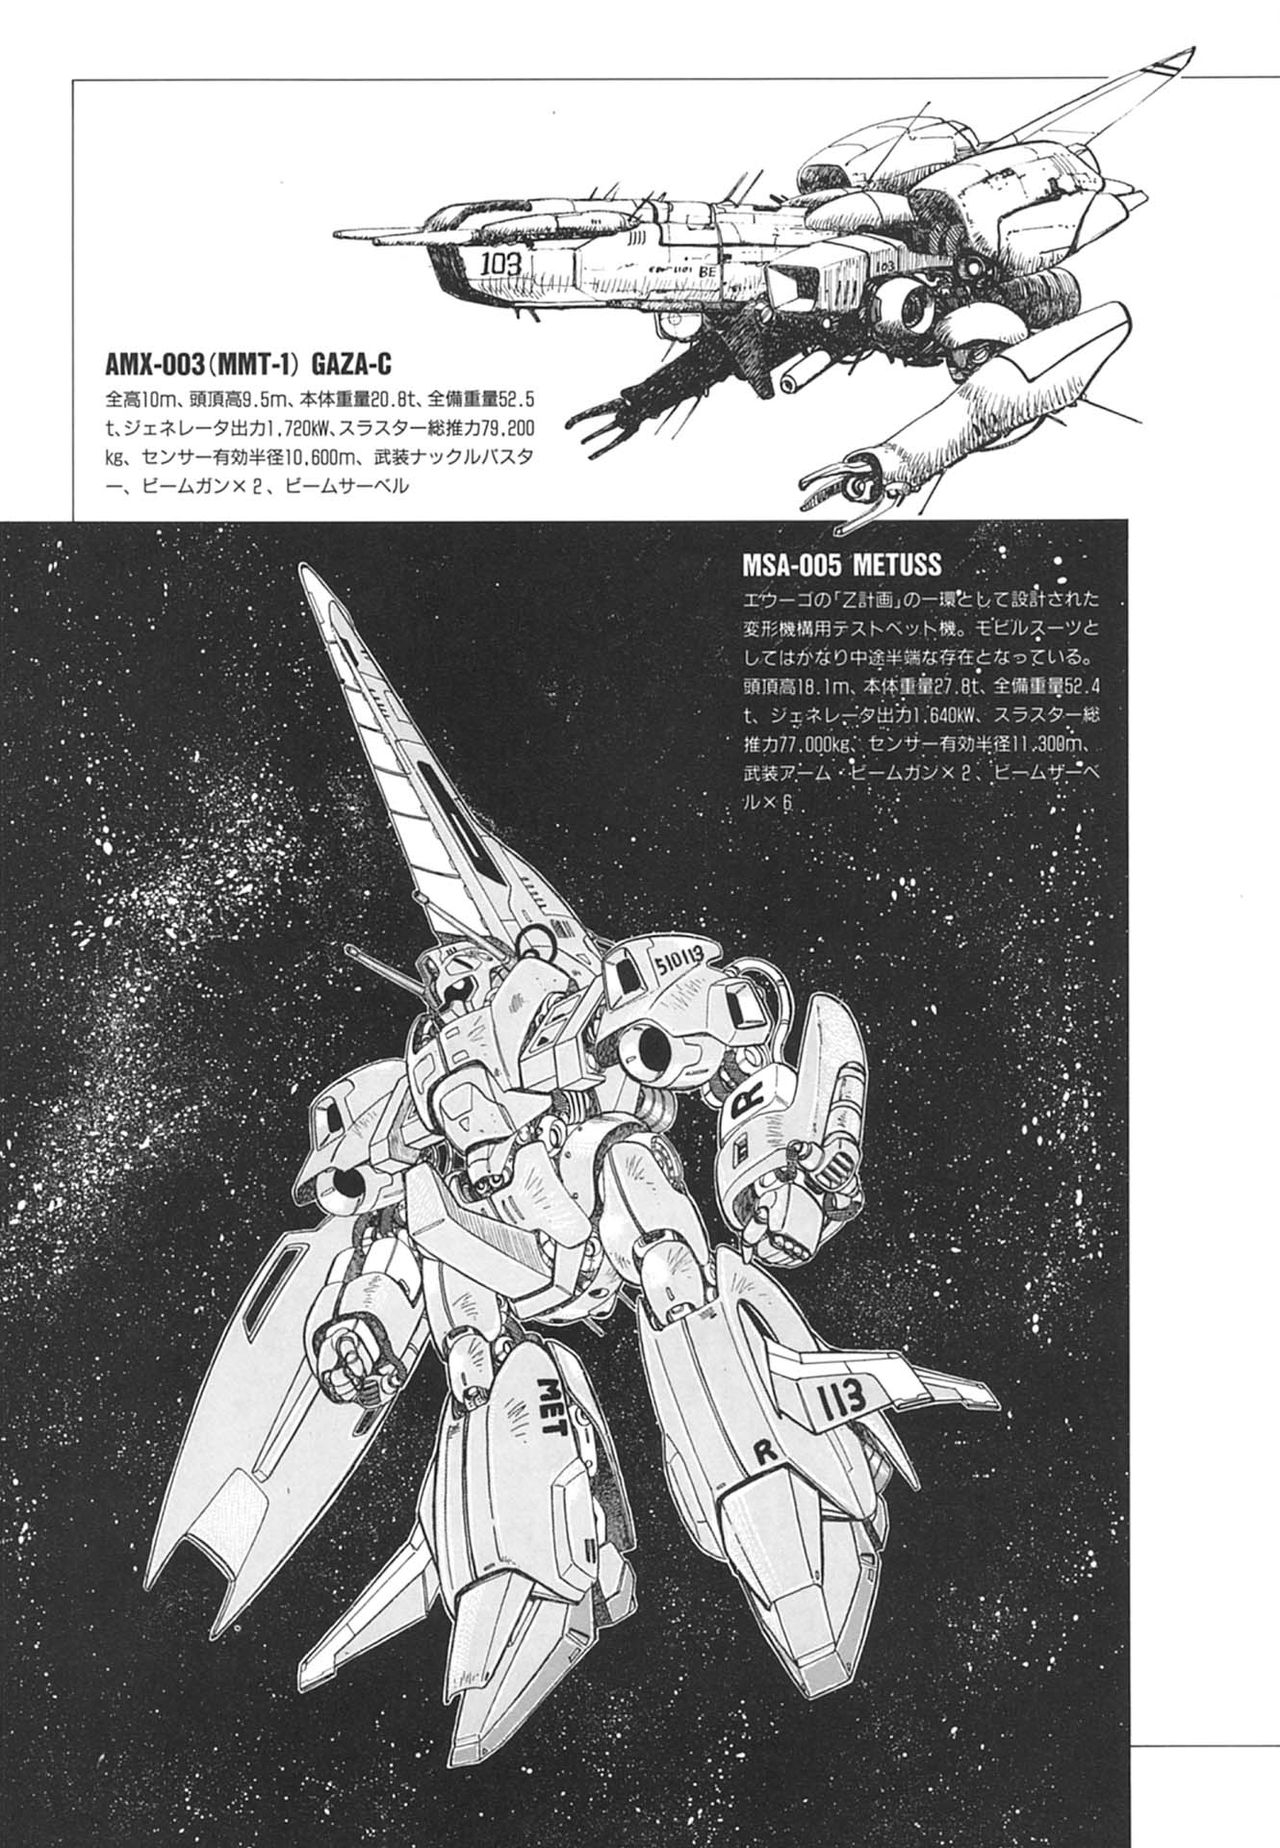 [Kazuhisa Kondo] Kazuhisa Kondo 2D & 3D Works - Go Ahead - From Mobile Suit Gundam to Original Mechanism 92